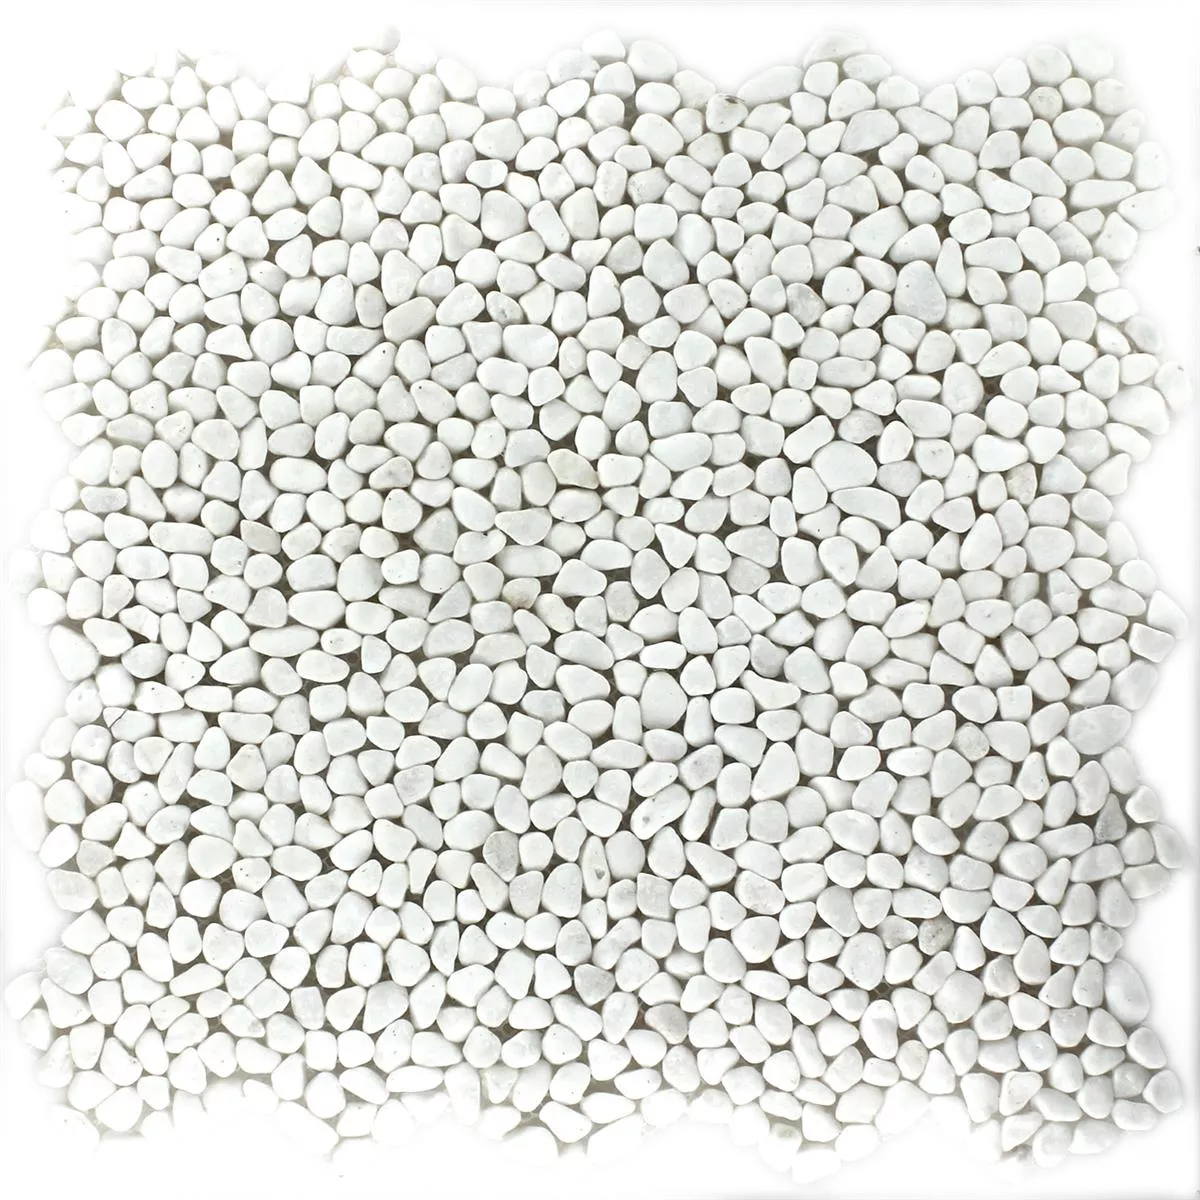 Sample River Pebbles Micro Mosaic White